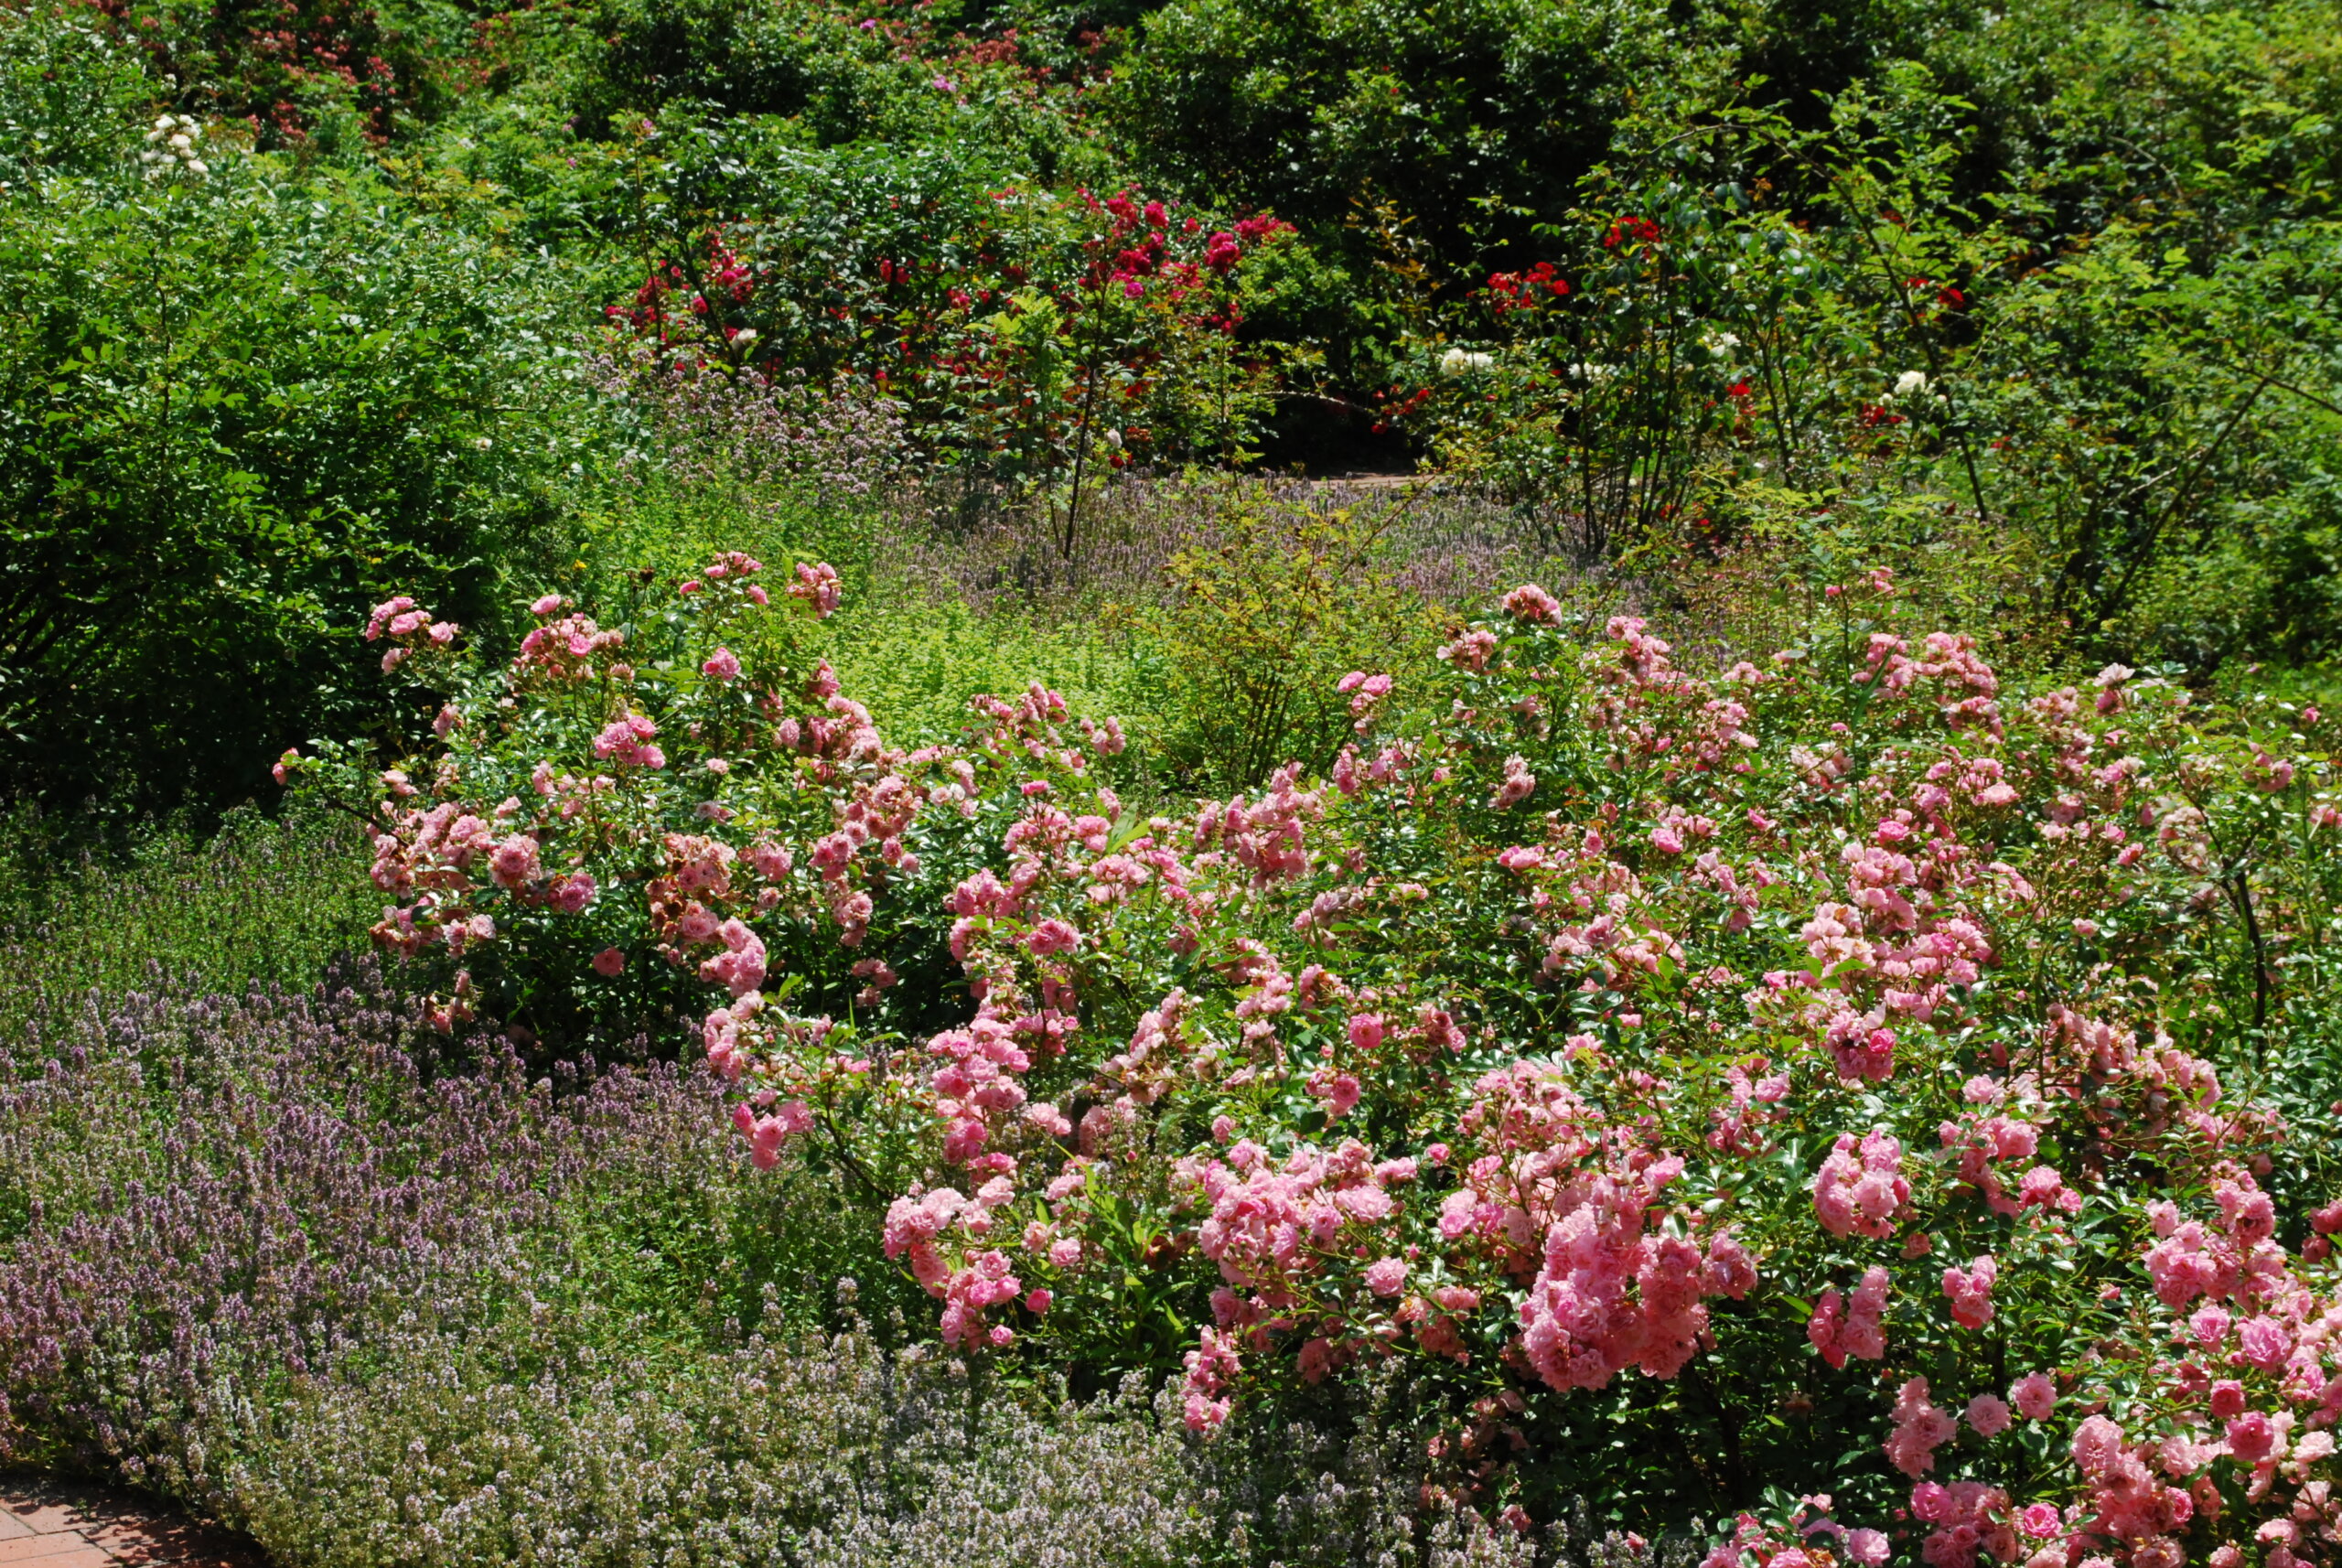 Enjoy a Lavish Northern Garden and its Lush Seasonal Flora